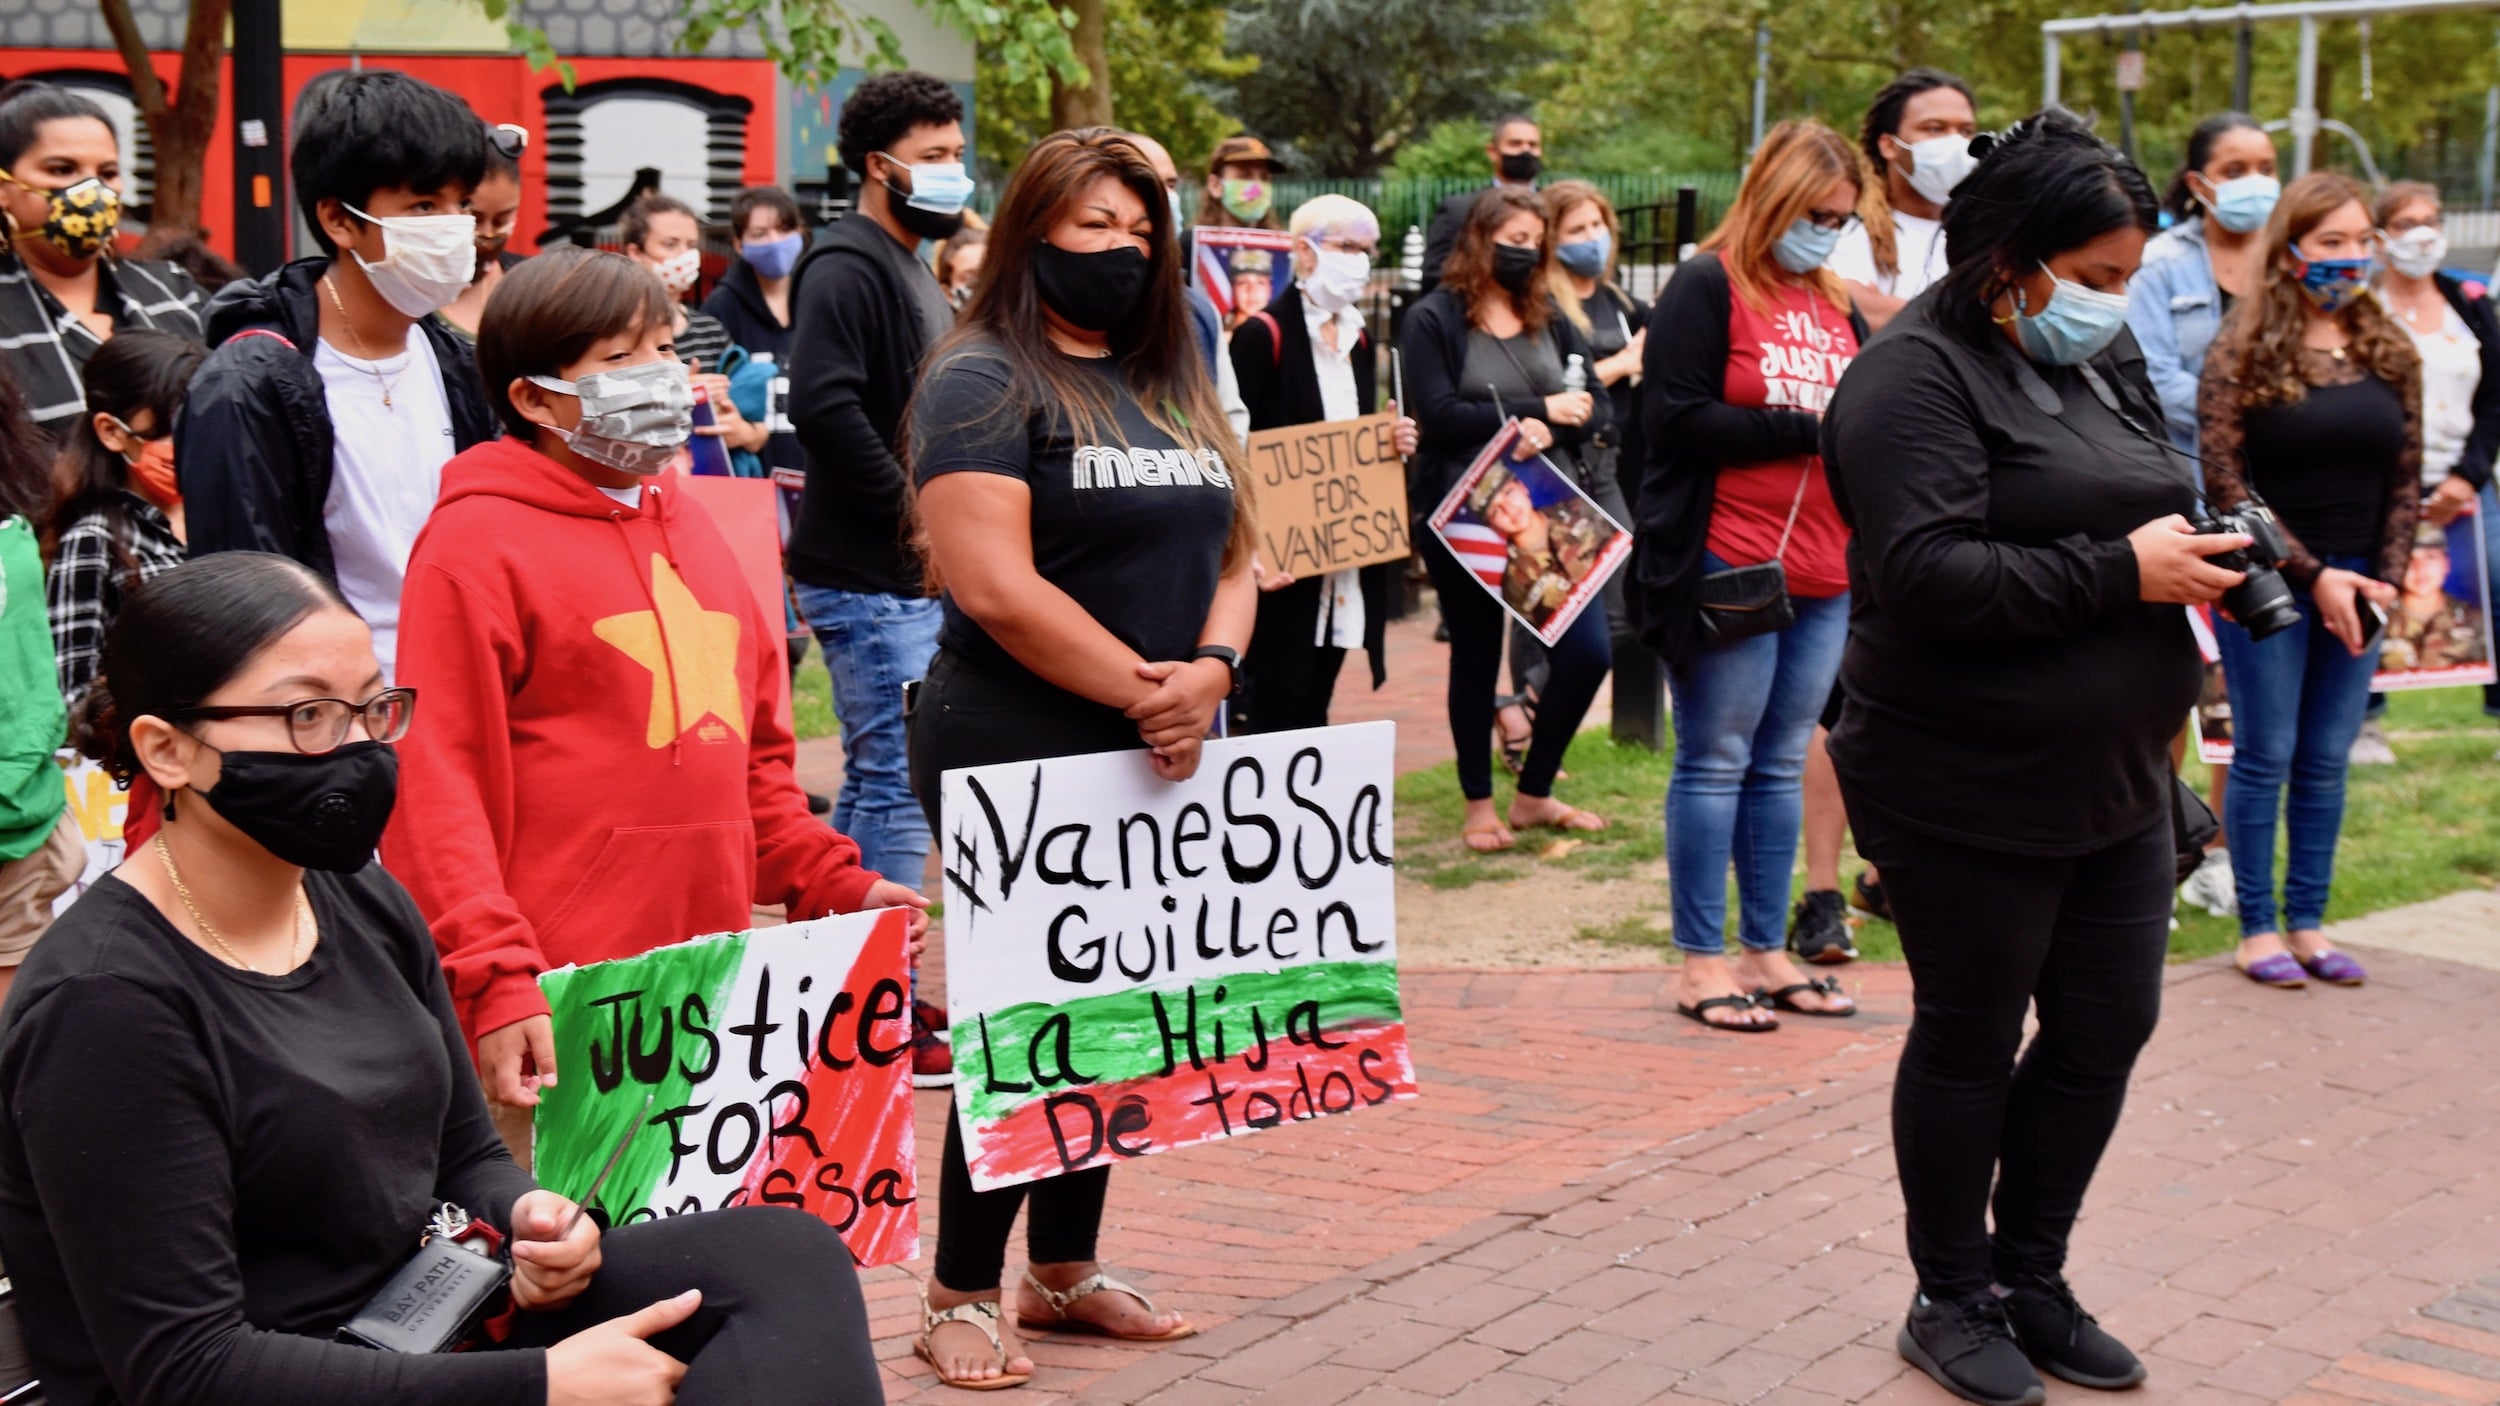 Rhode Island: The vigil for Vanessa Guillén in Providence